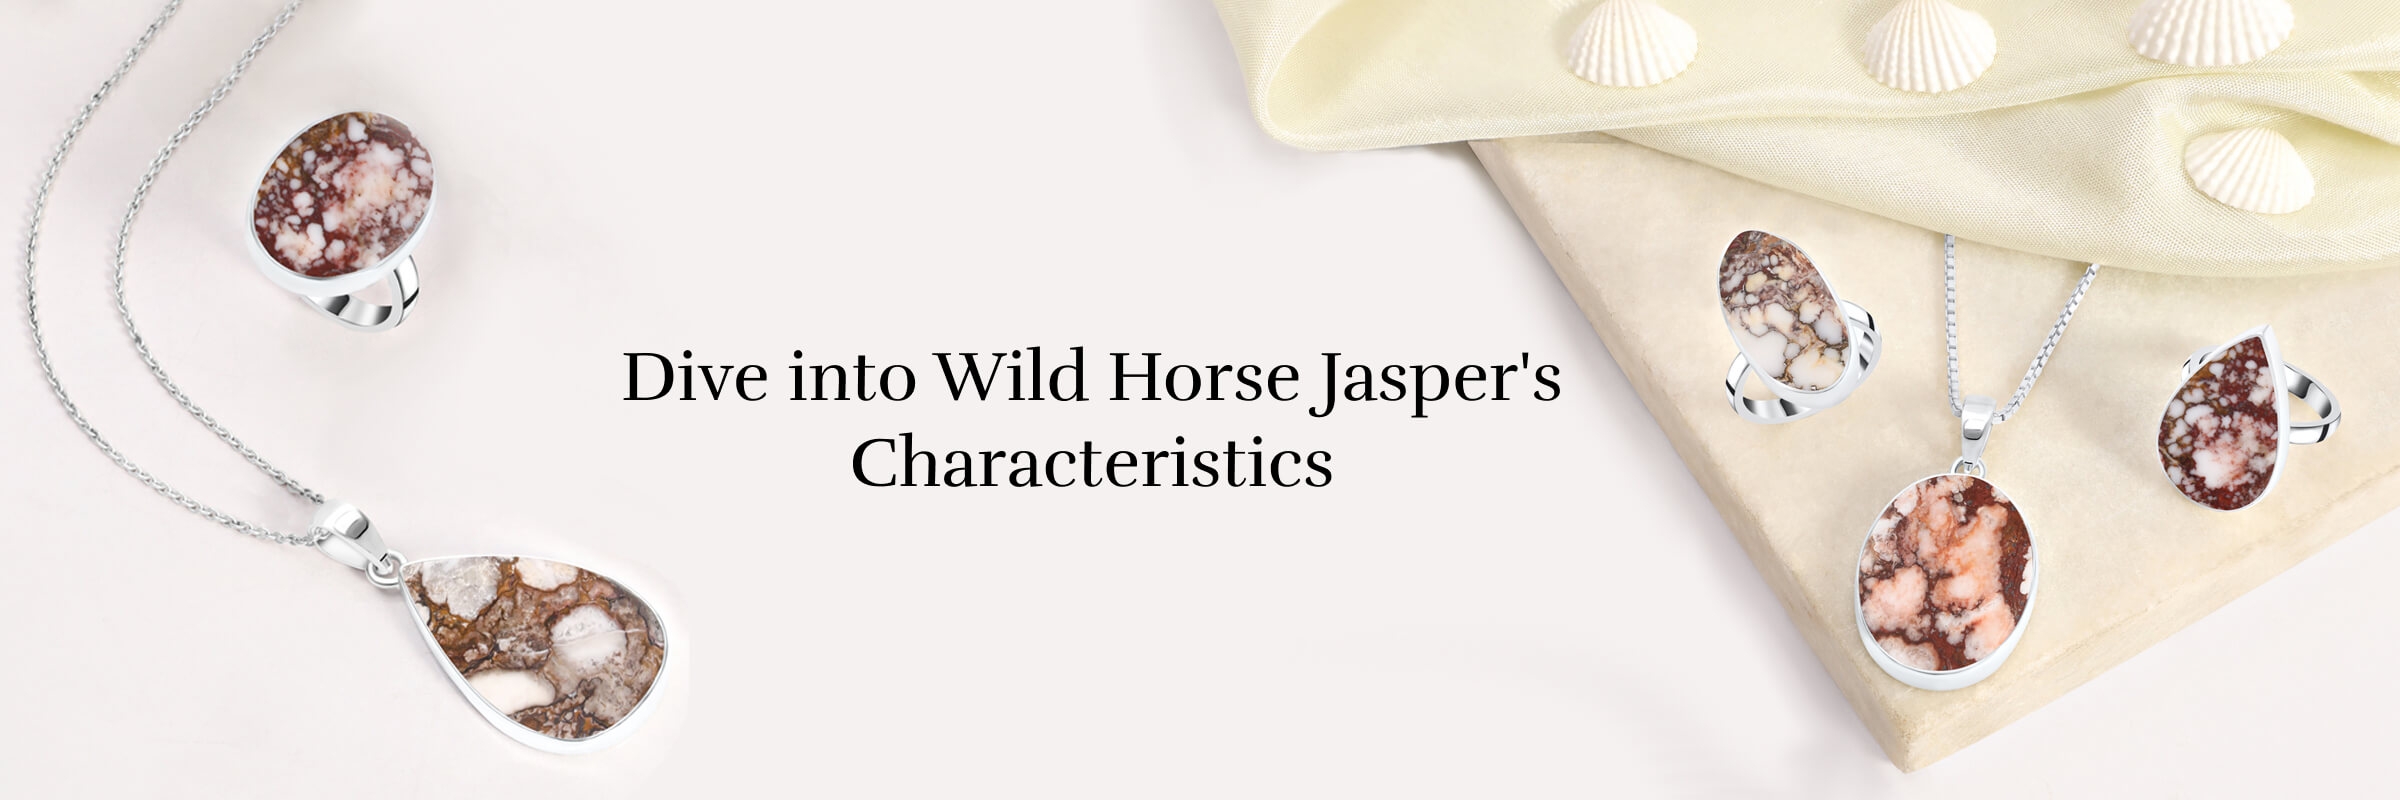 Physical Properties of Wild Horse Jasper Stone